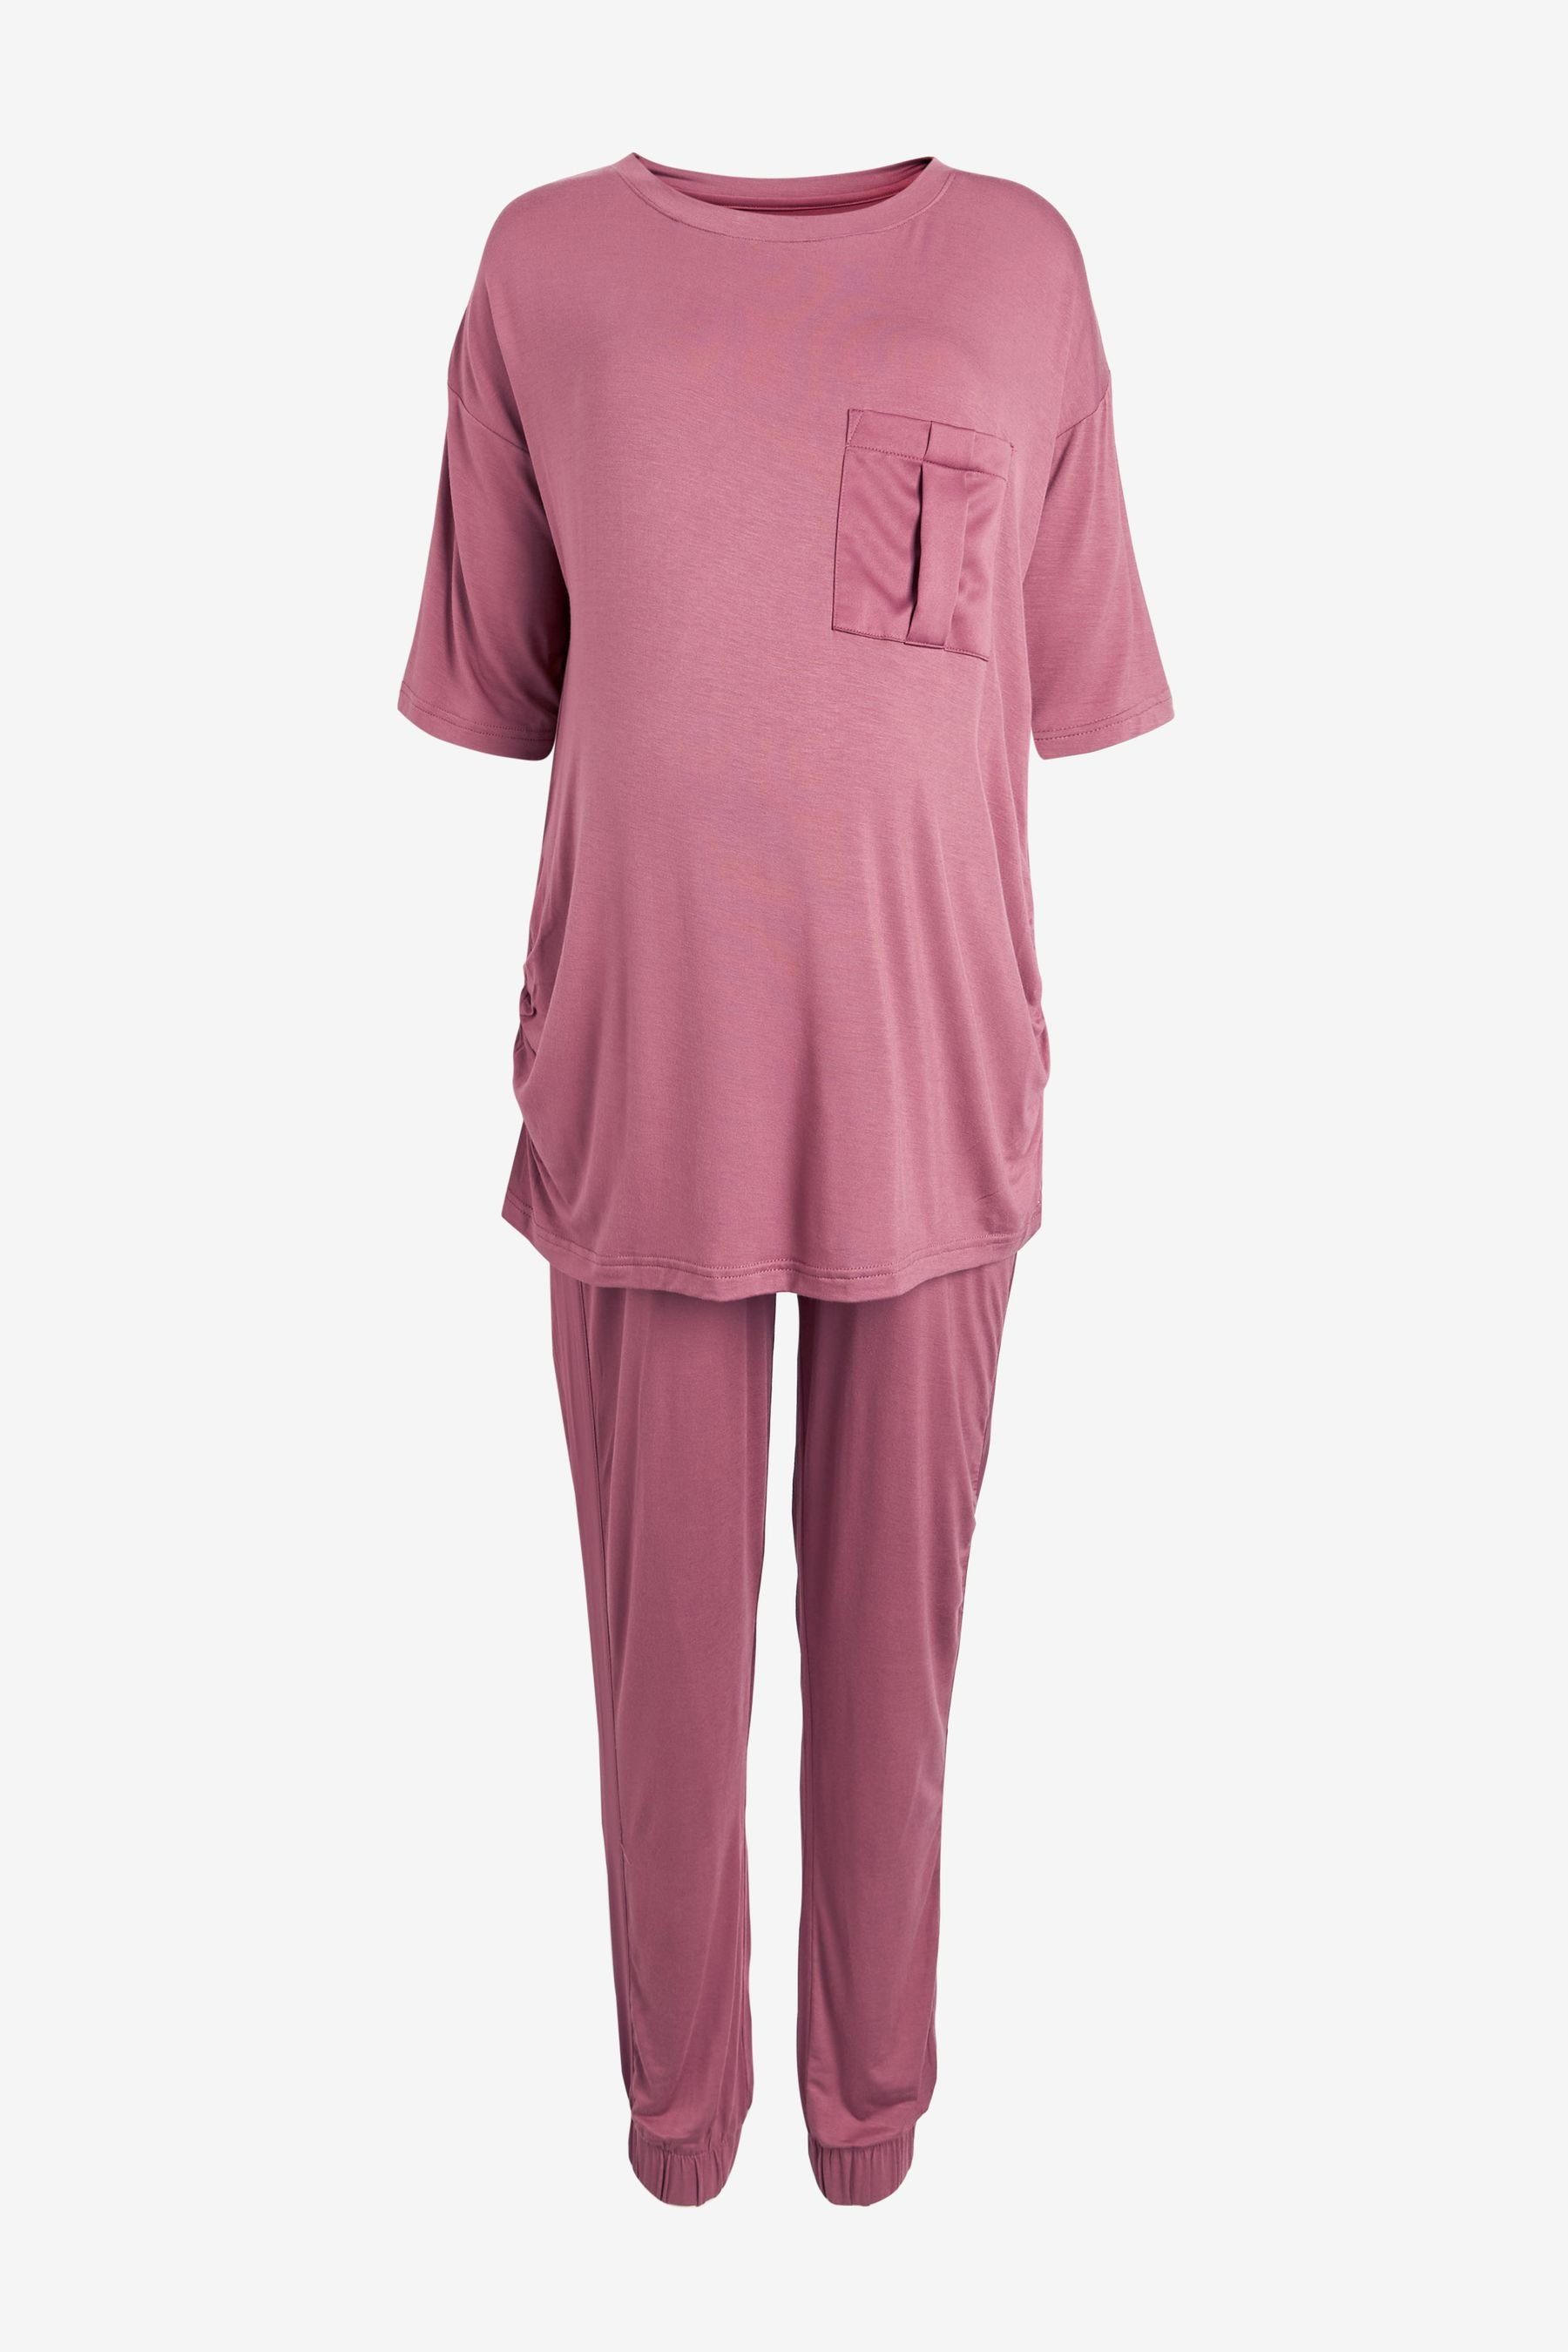 Next Umstandspyjama Jersey-Schlafanzug mit Satinbesatz, Umstandsmode (2 tlg)